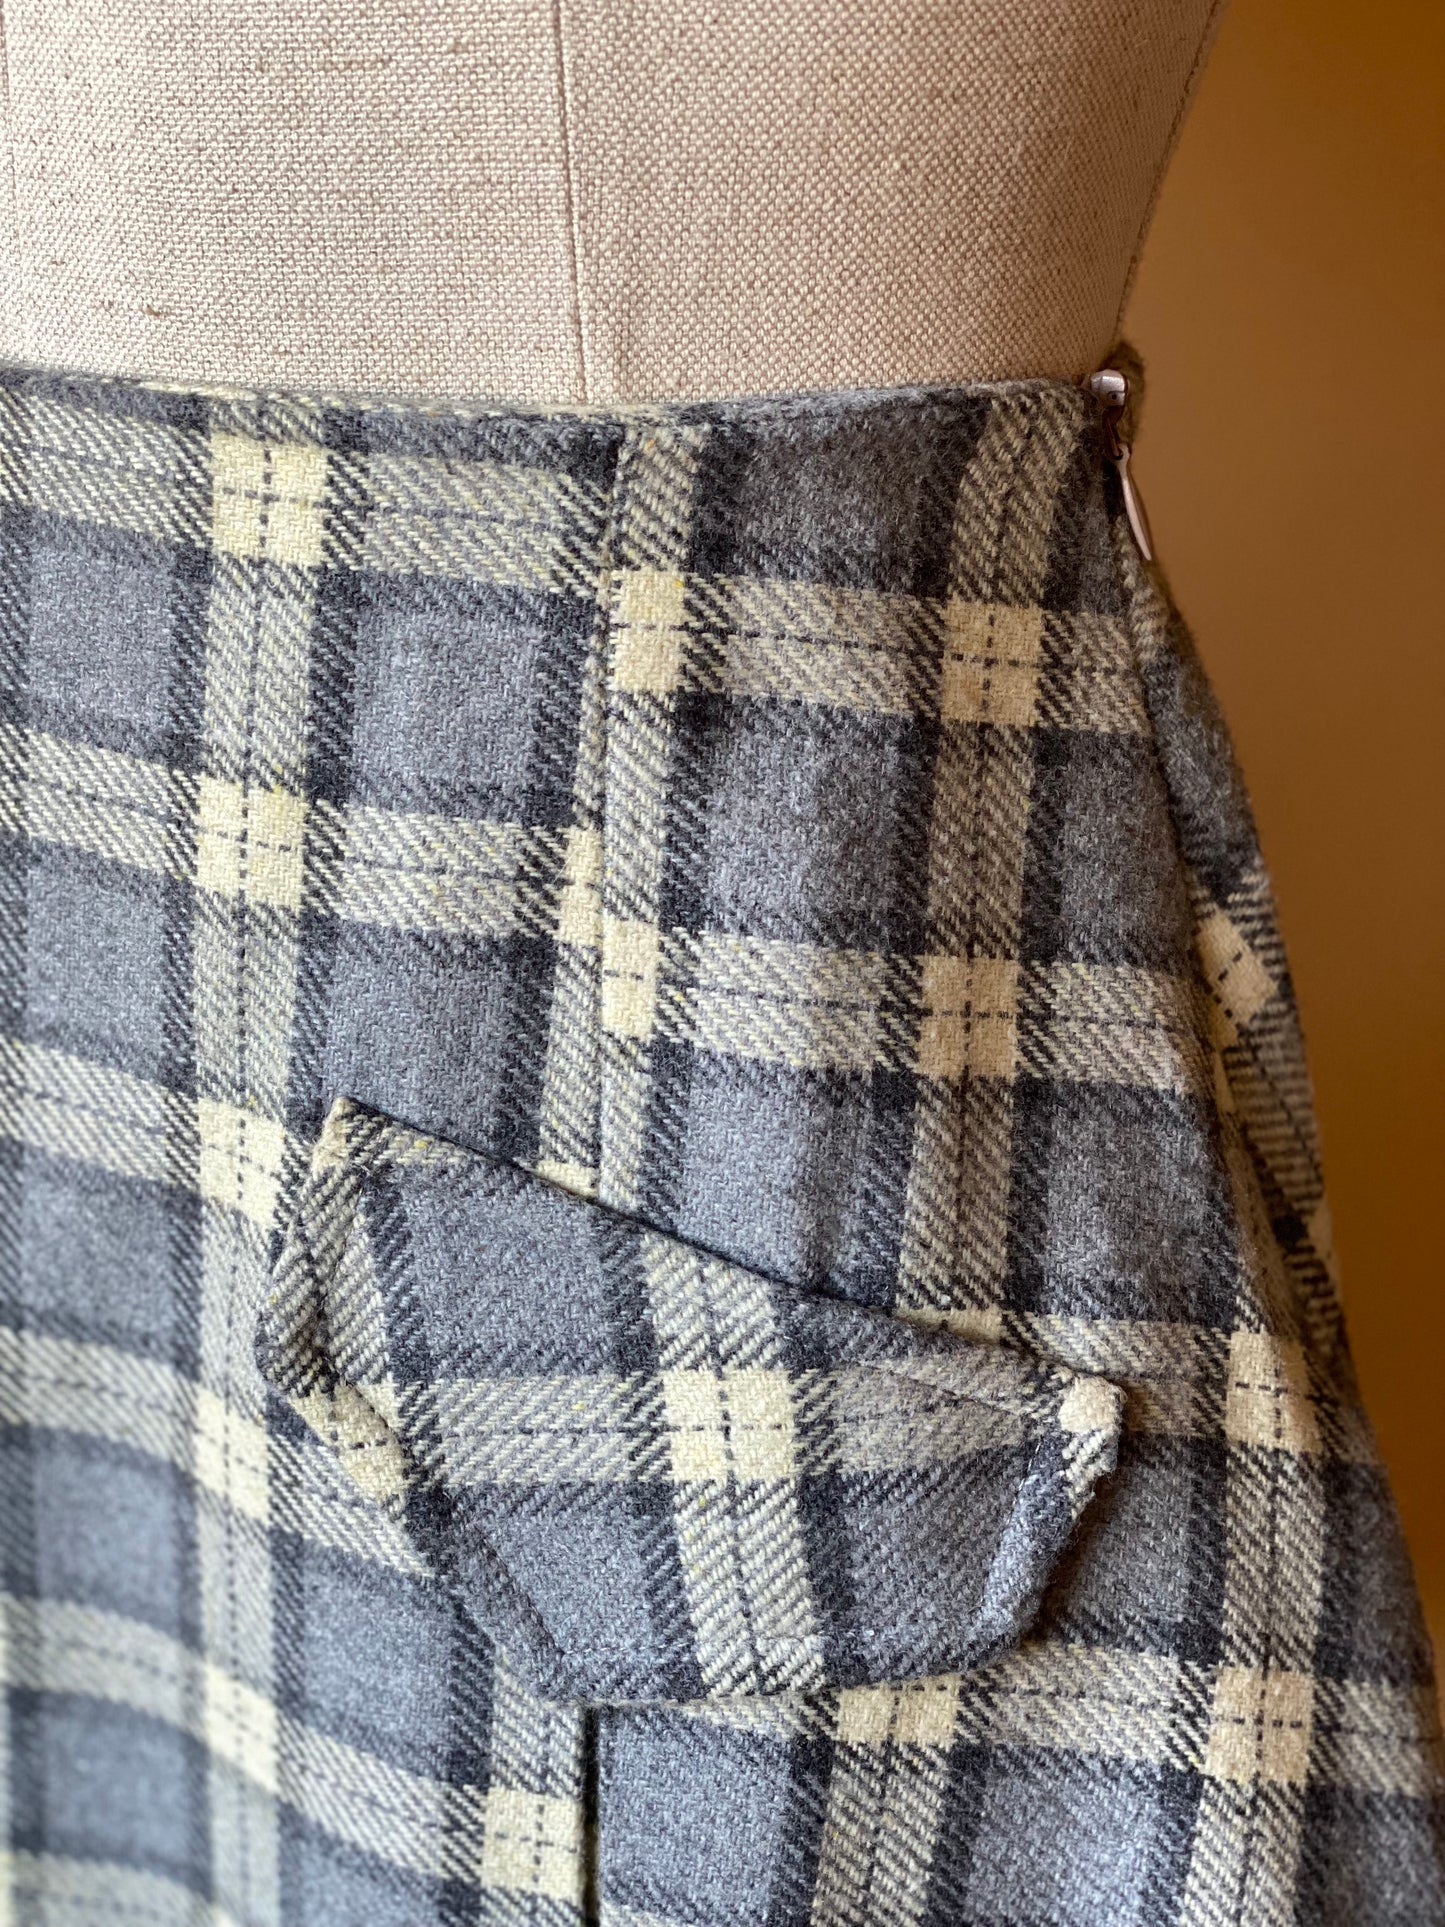 Vintage Checkered Paneled Mini Skirt